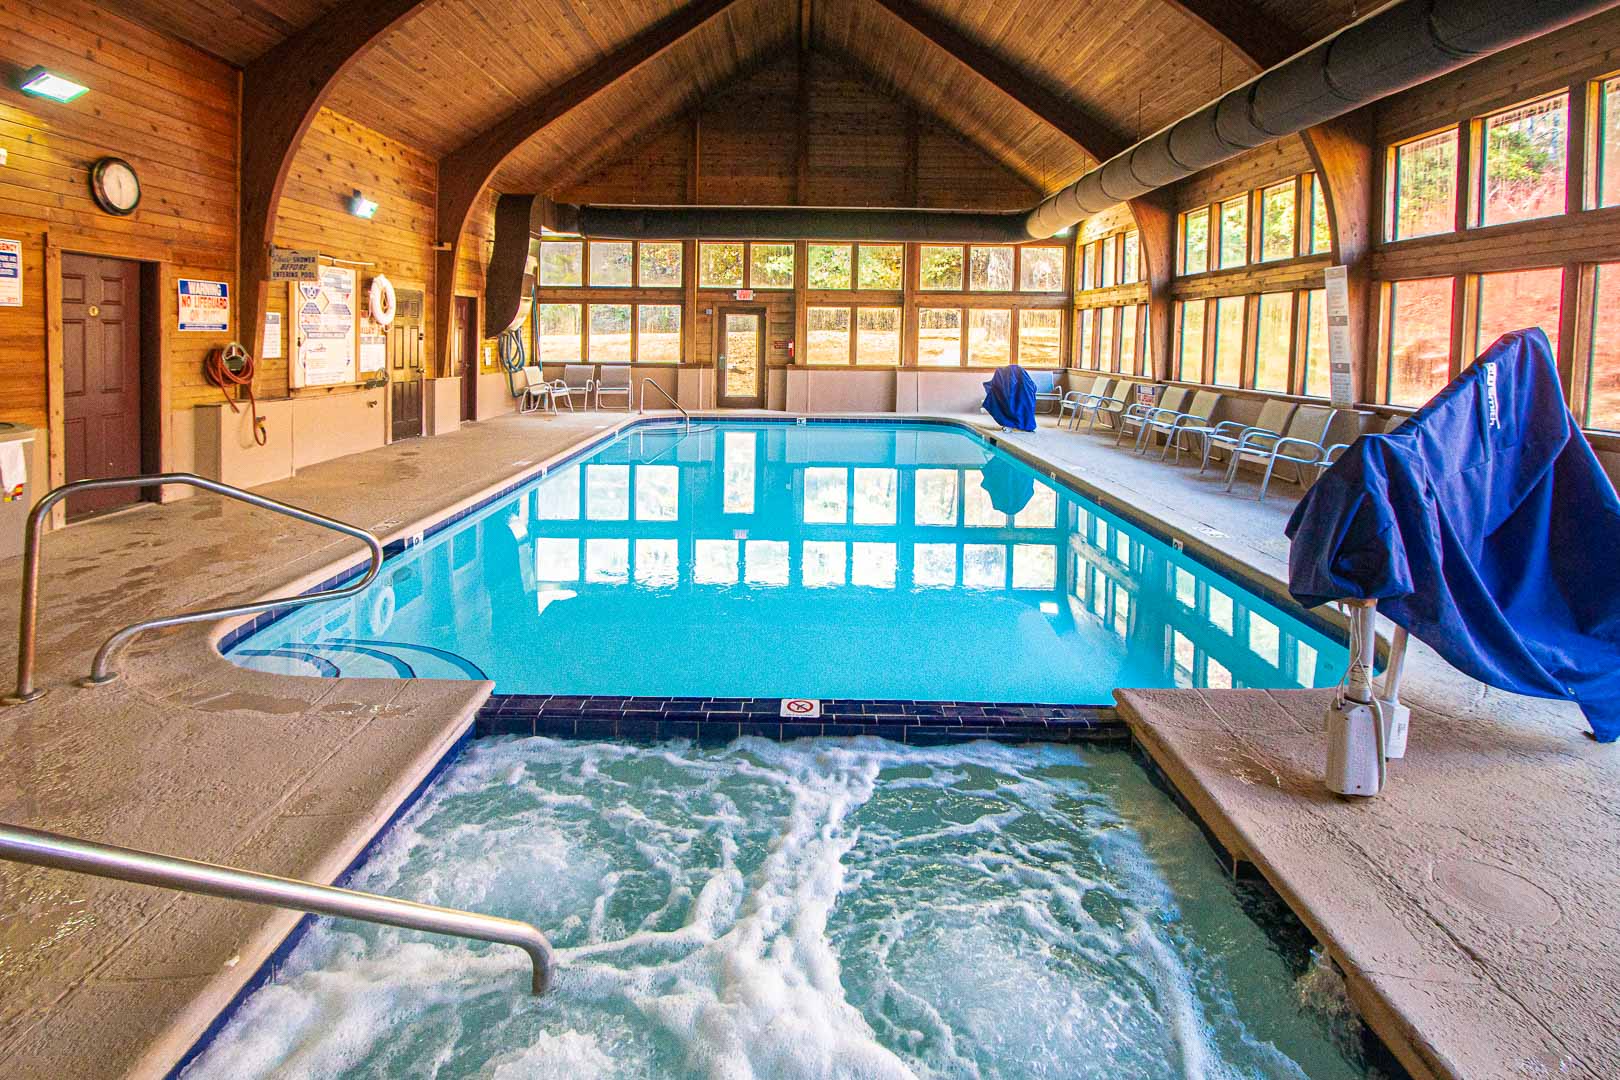 A quaint indoor swimming pool and Jacuzzi tub at VRI's Fox Run Resort in North Carolina.